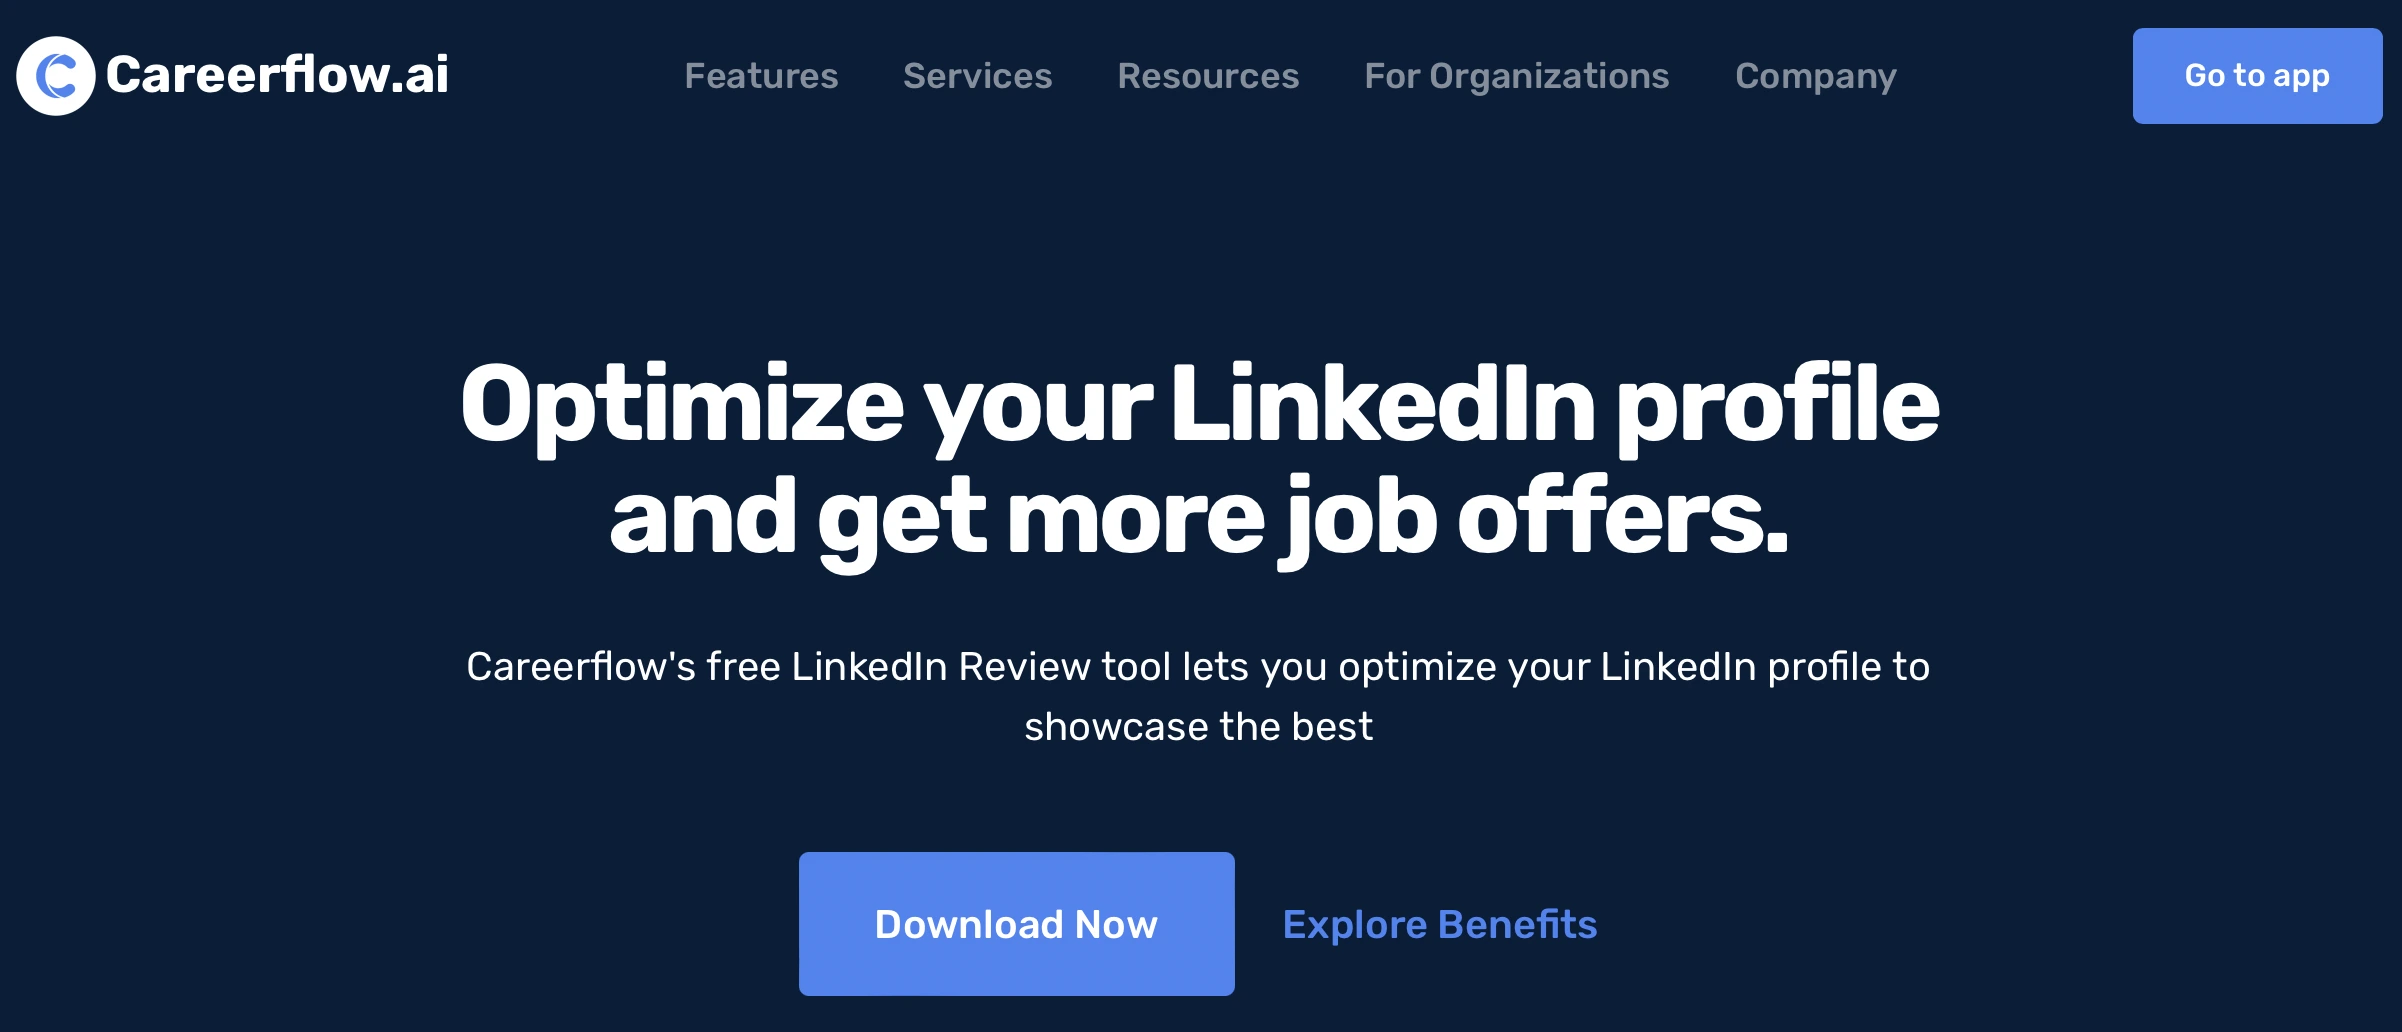 Careerflow LinkedIn Optimization Tool - homepage